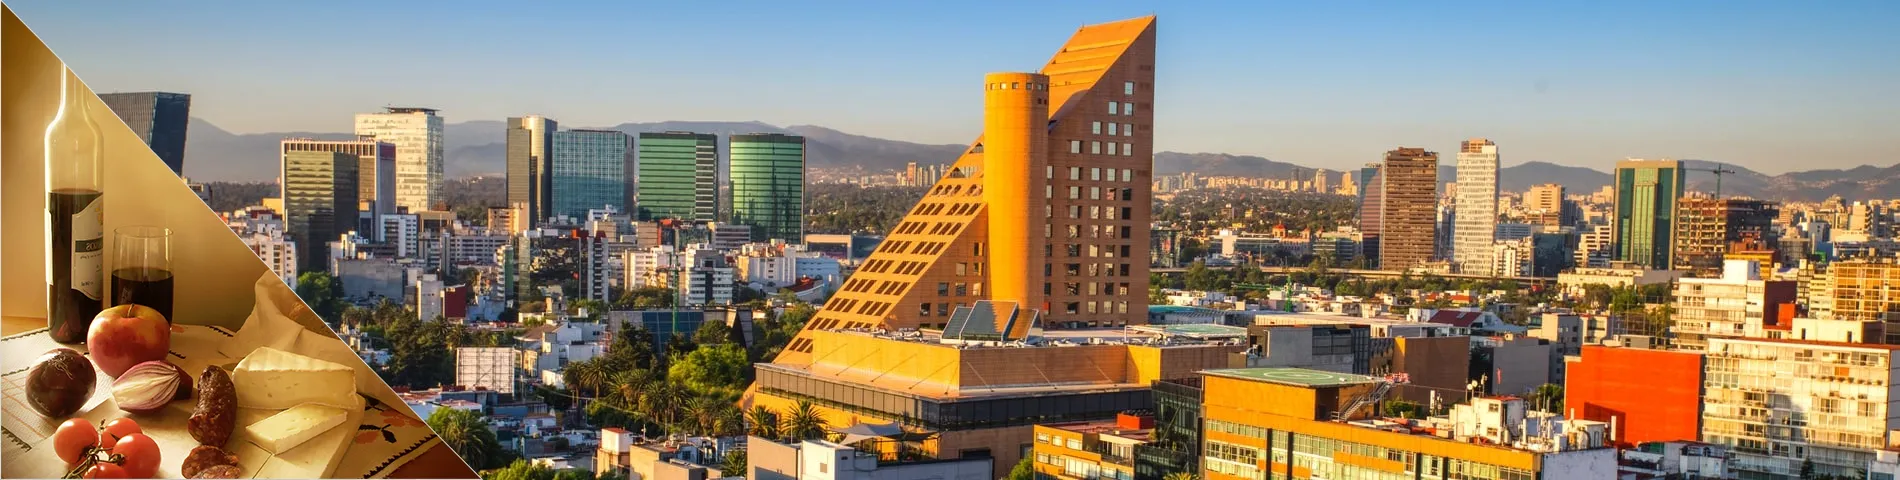 Mexico City - Spaans & cultuur